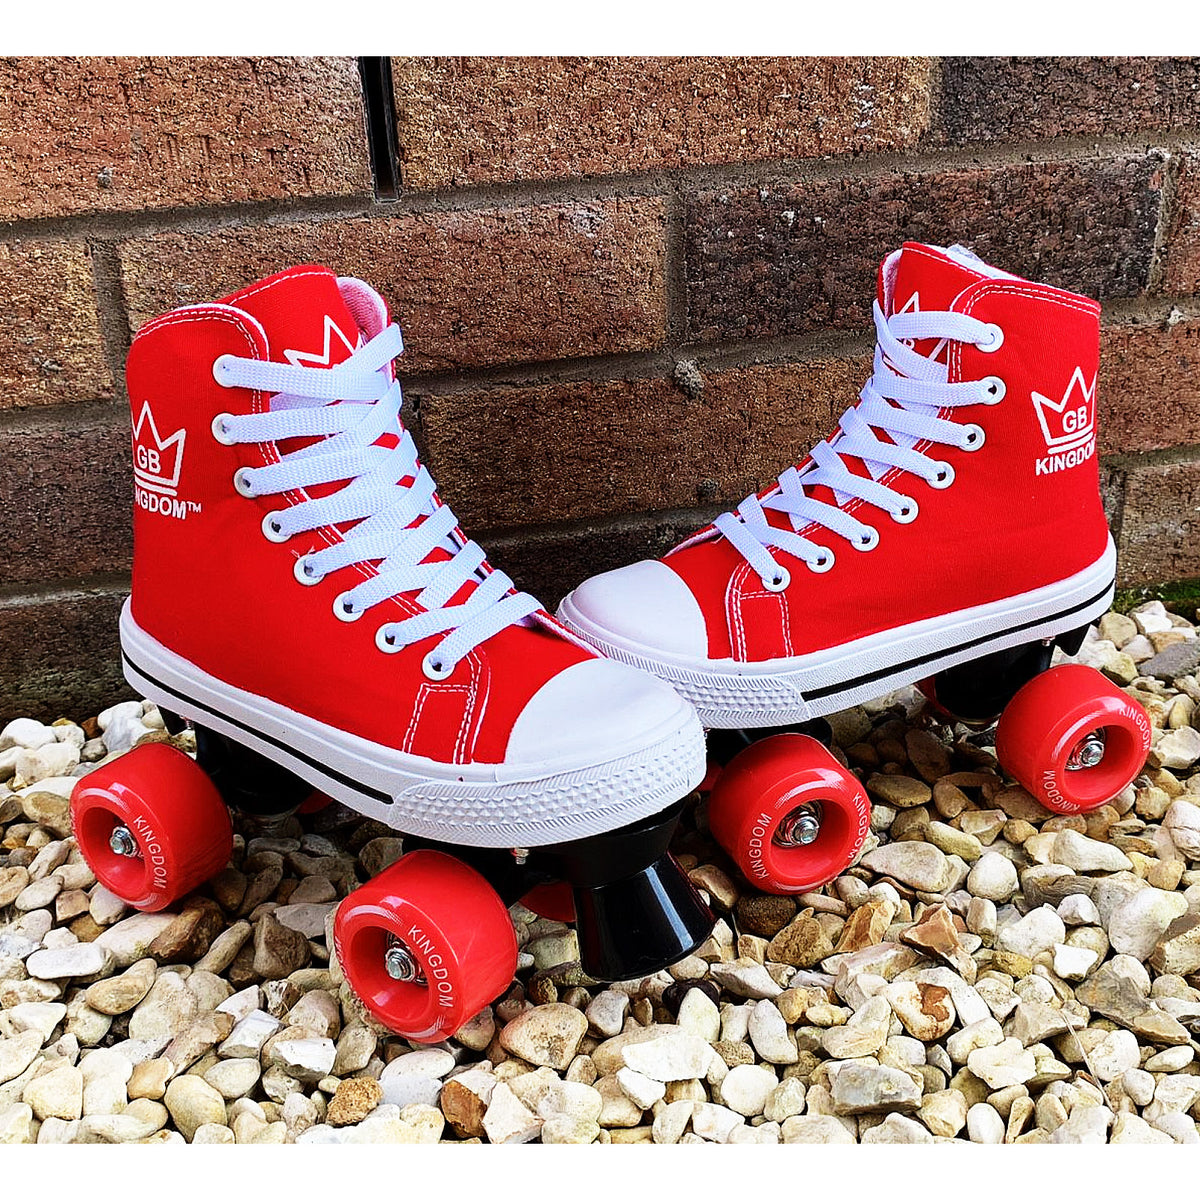 Kingdom GB HI-PE Canvas Quad Roller Skates Red